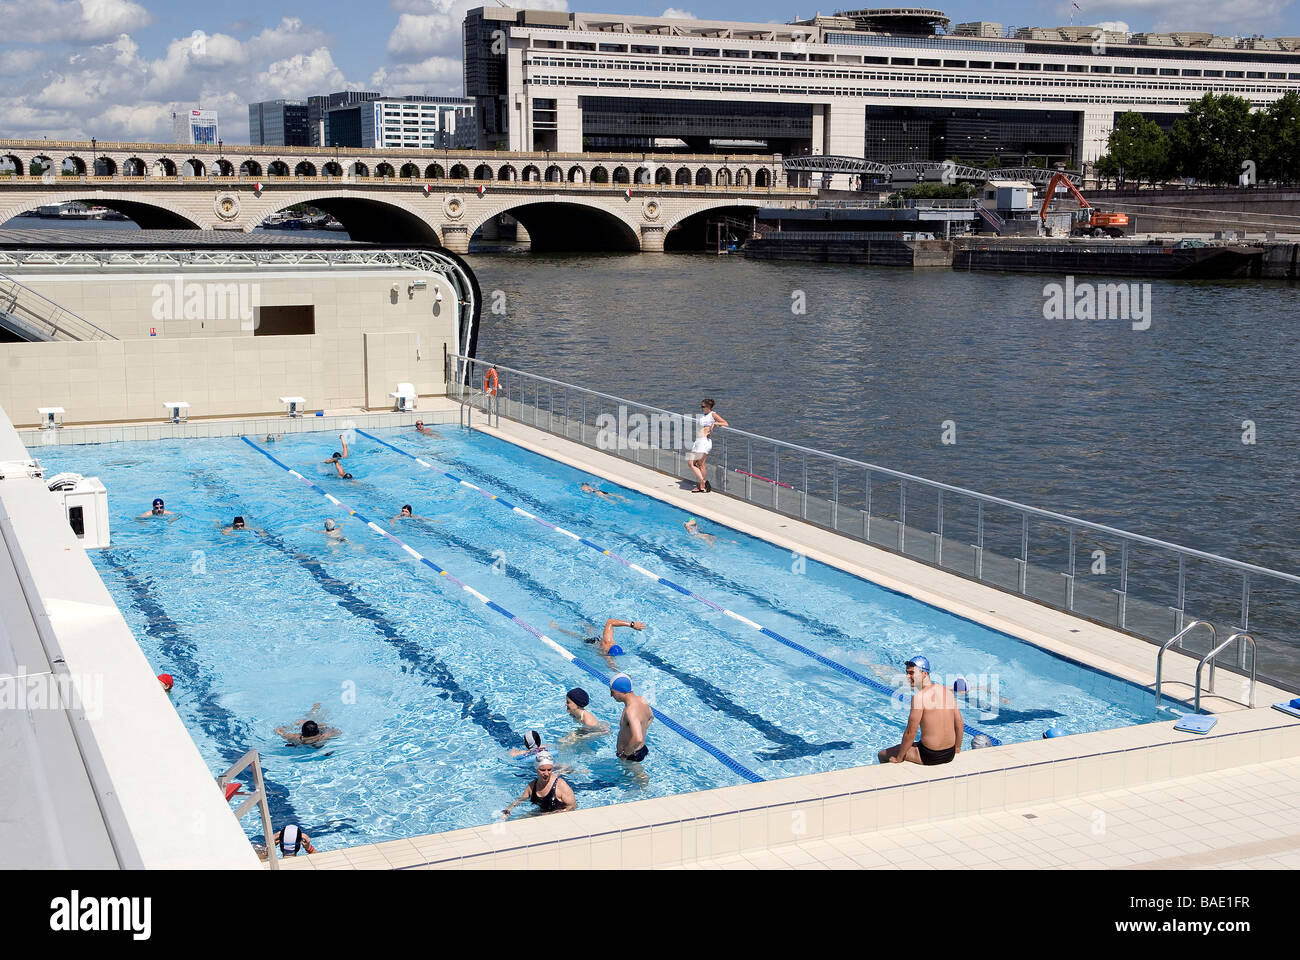 Josephine Baker Swimming Pool Stockfotos Und Bilder Kaufen Alamy